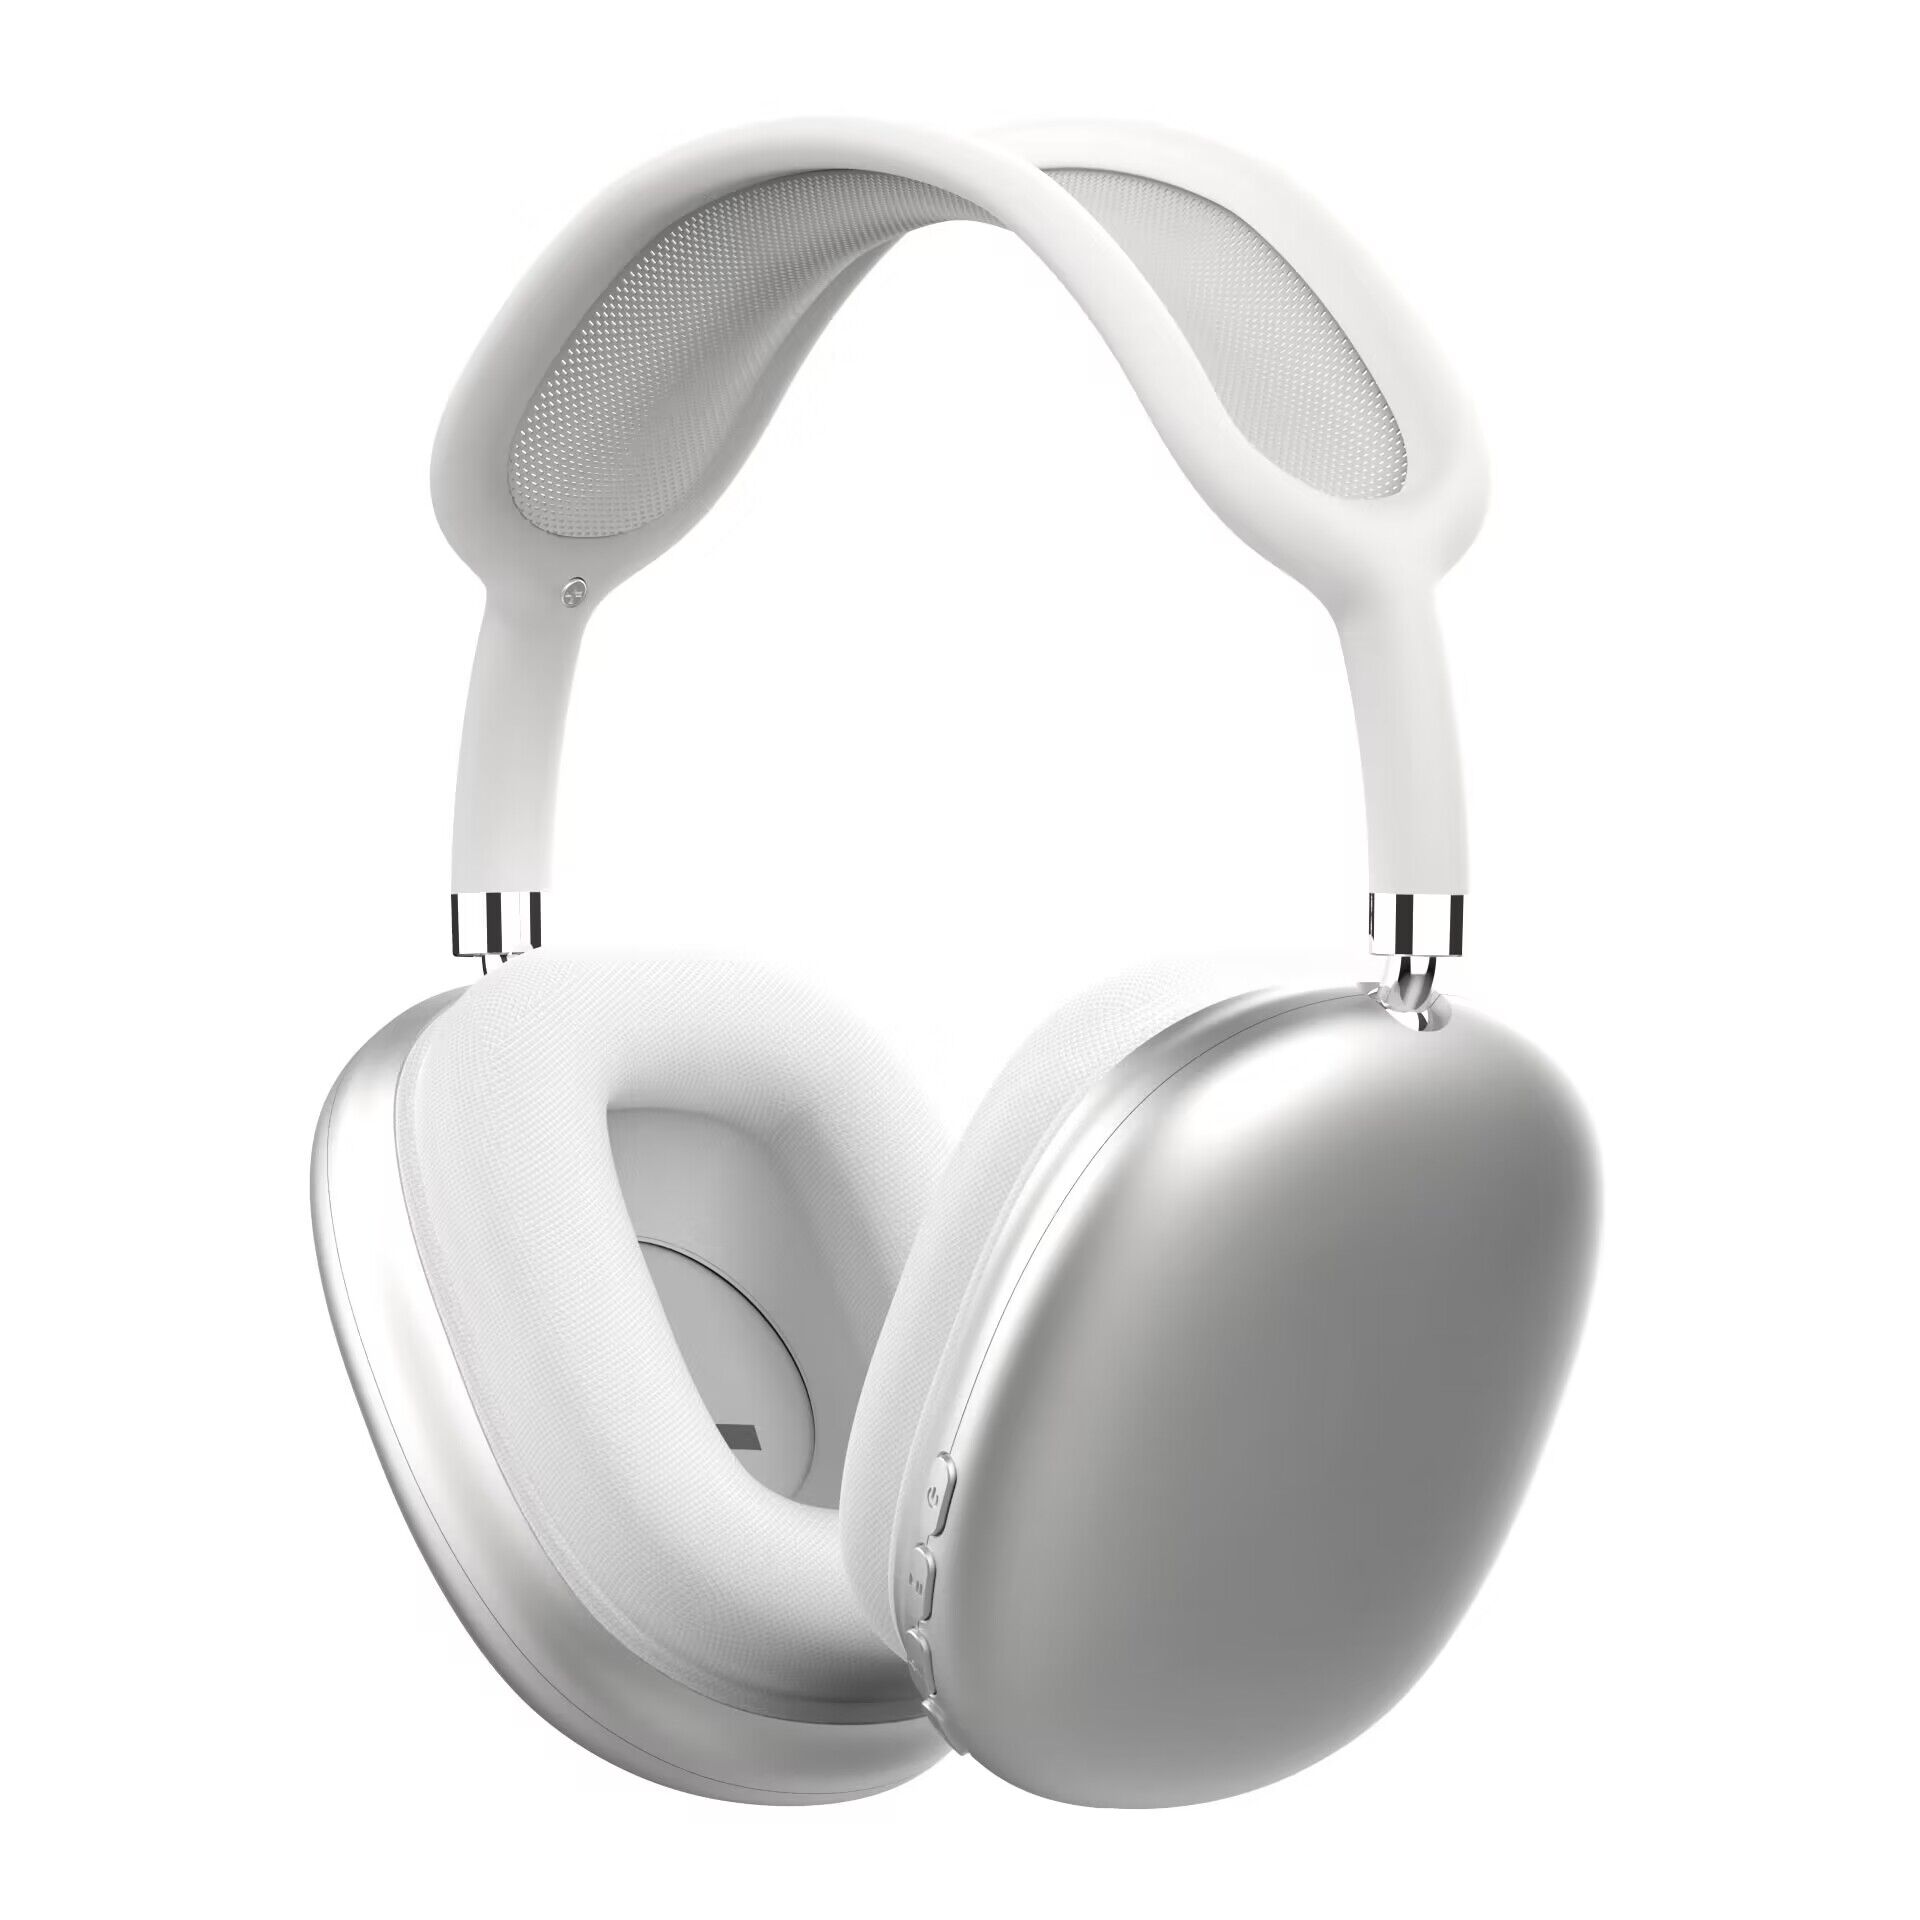 AIR Kopfhörer Bluetooth Wireless Sport Spiele Musik Universal Headsets 35